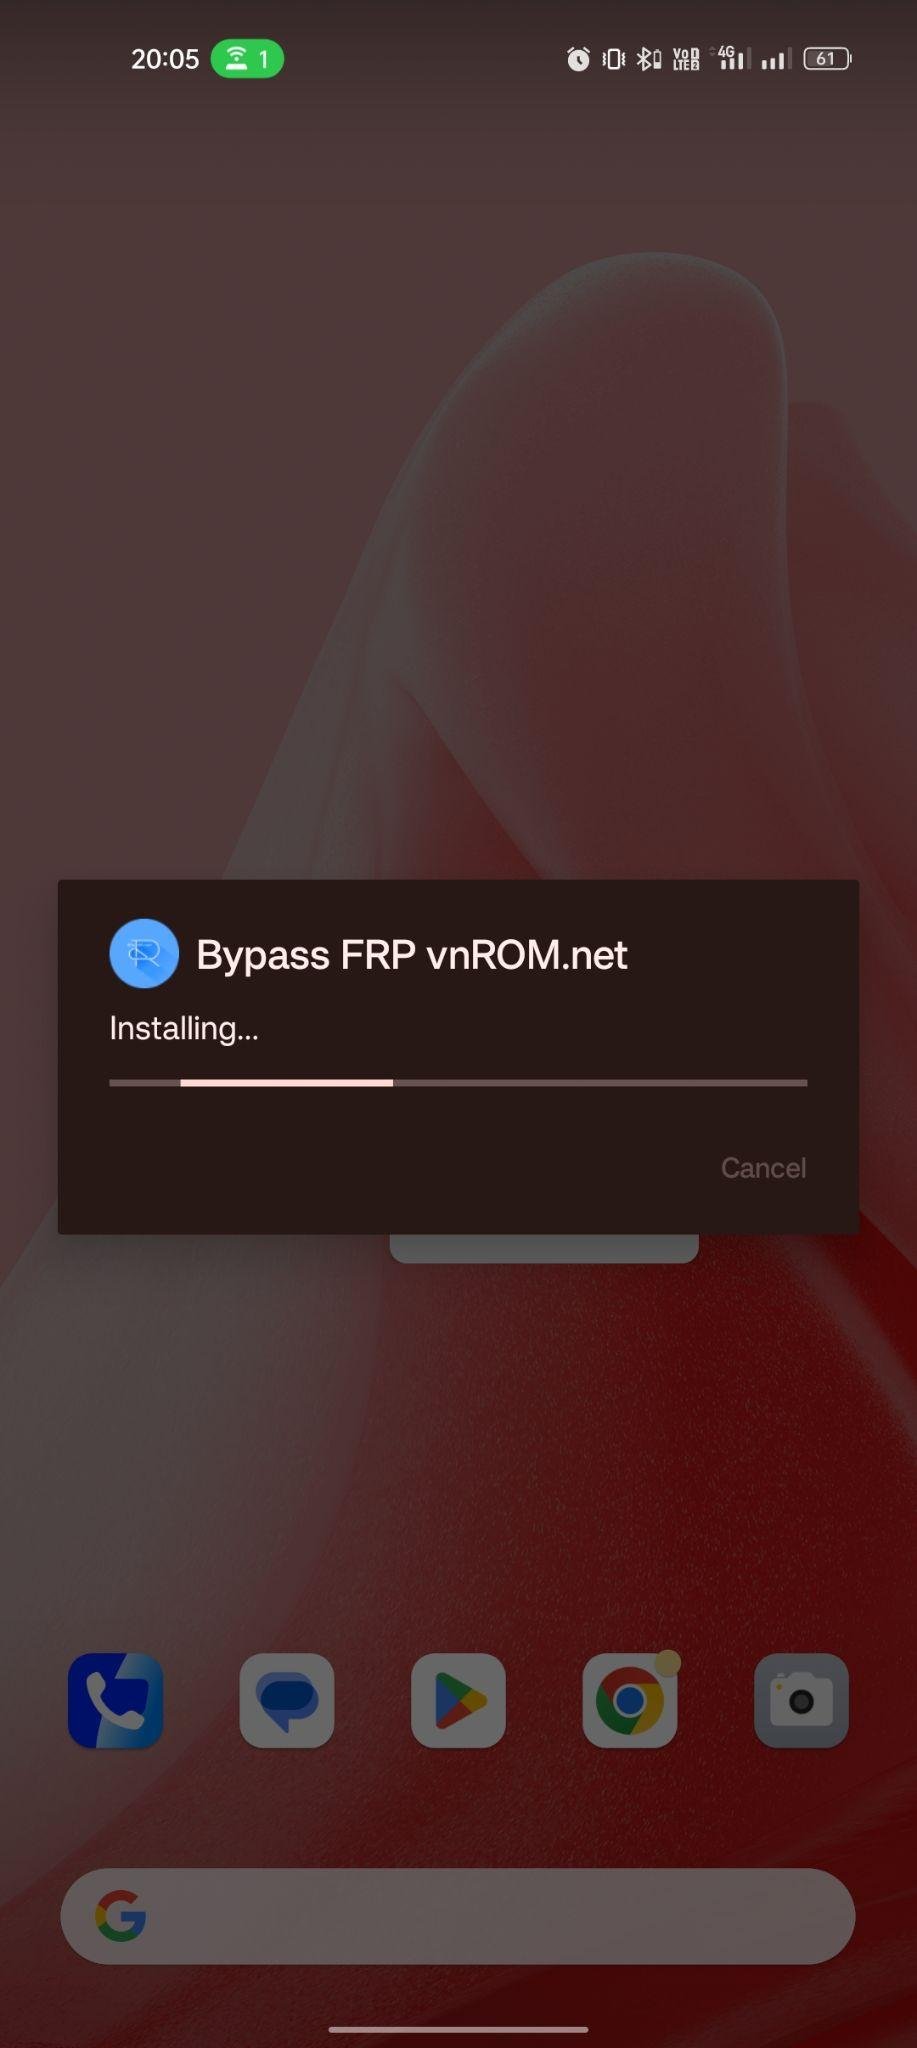 vnROM Bypass FRP apk installing